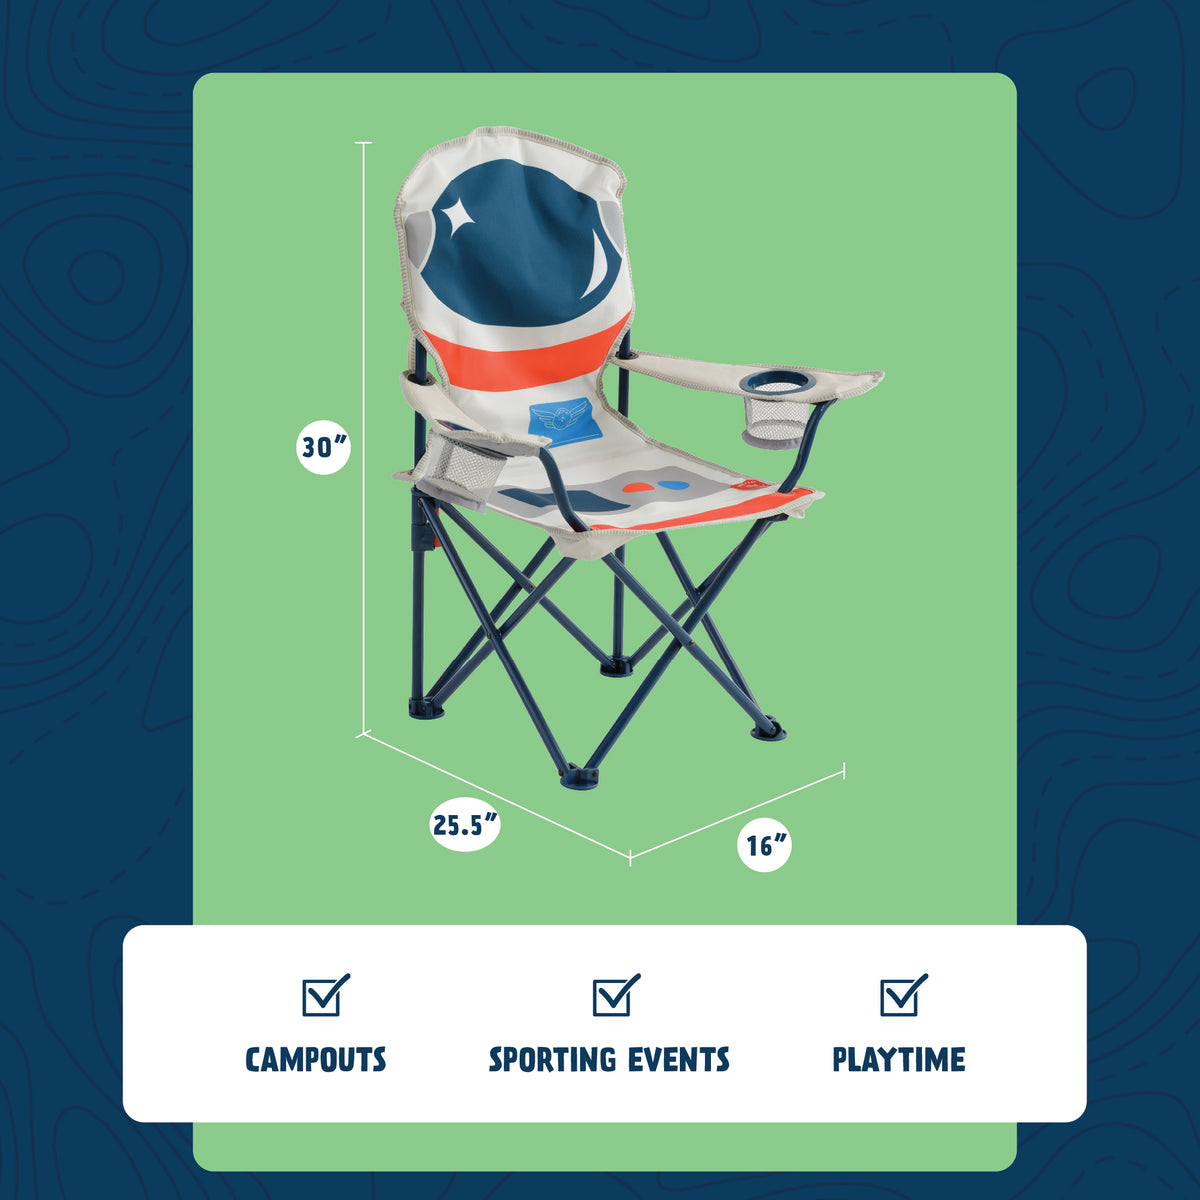 Jett the Astronaut Kids' Camping Chair